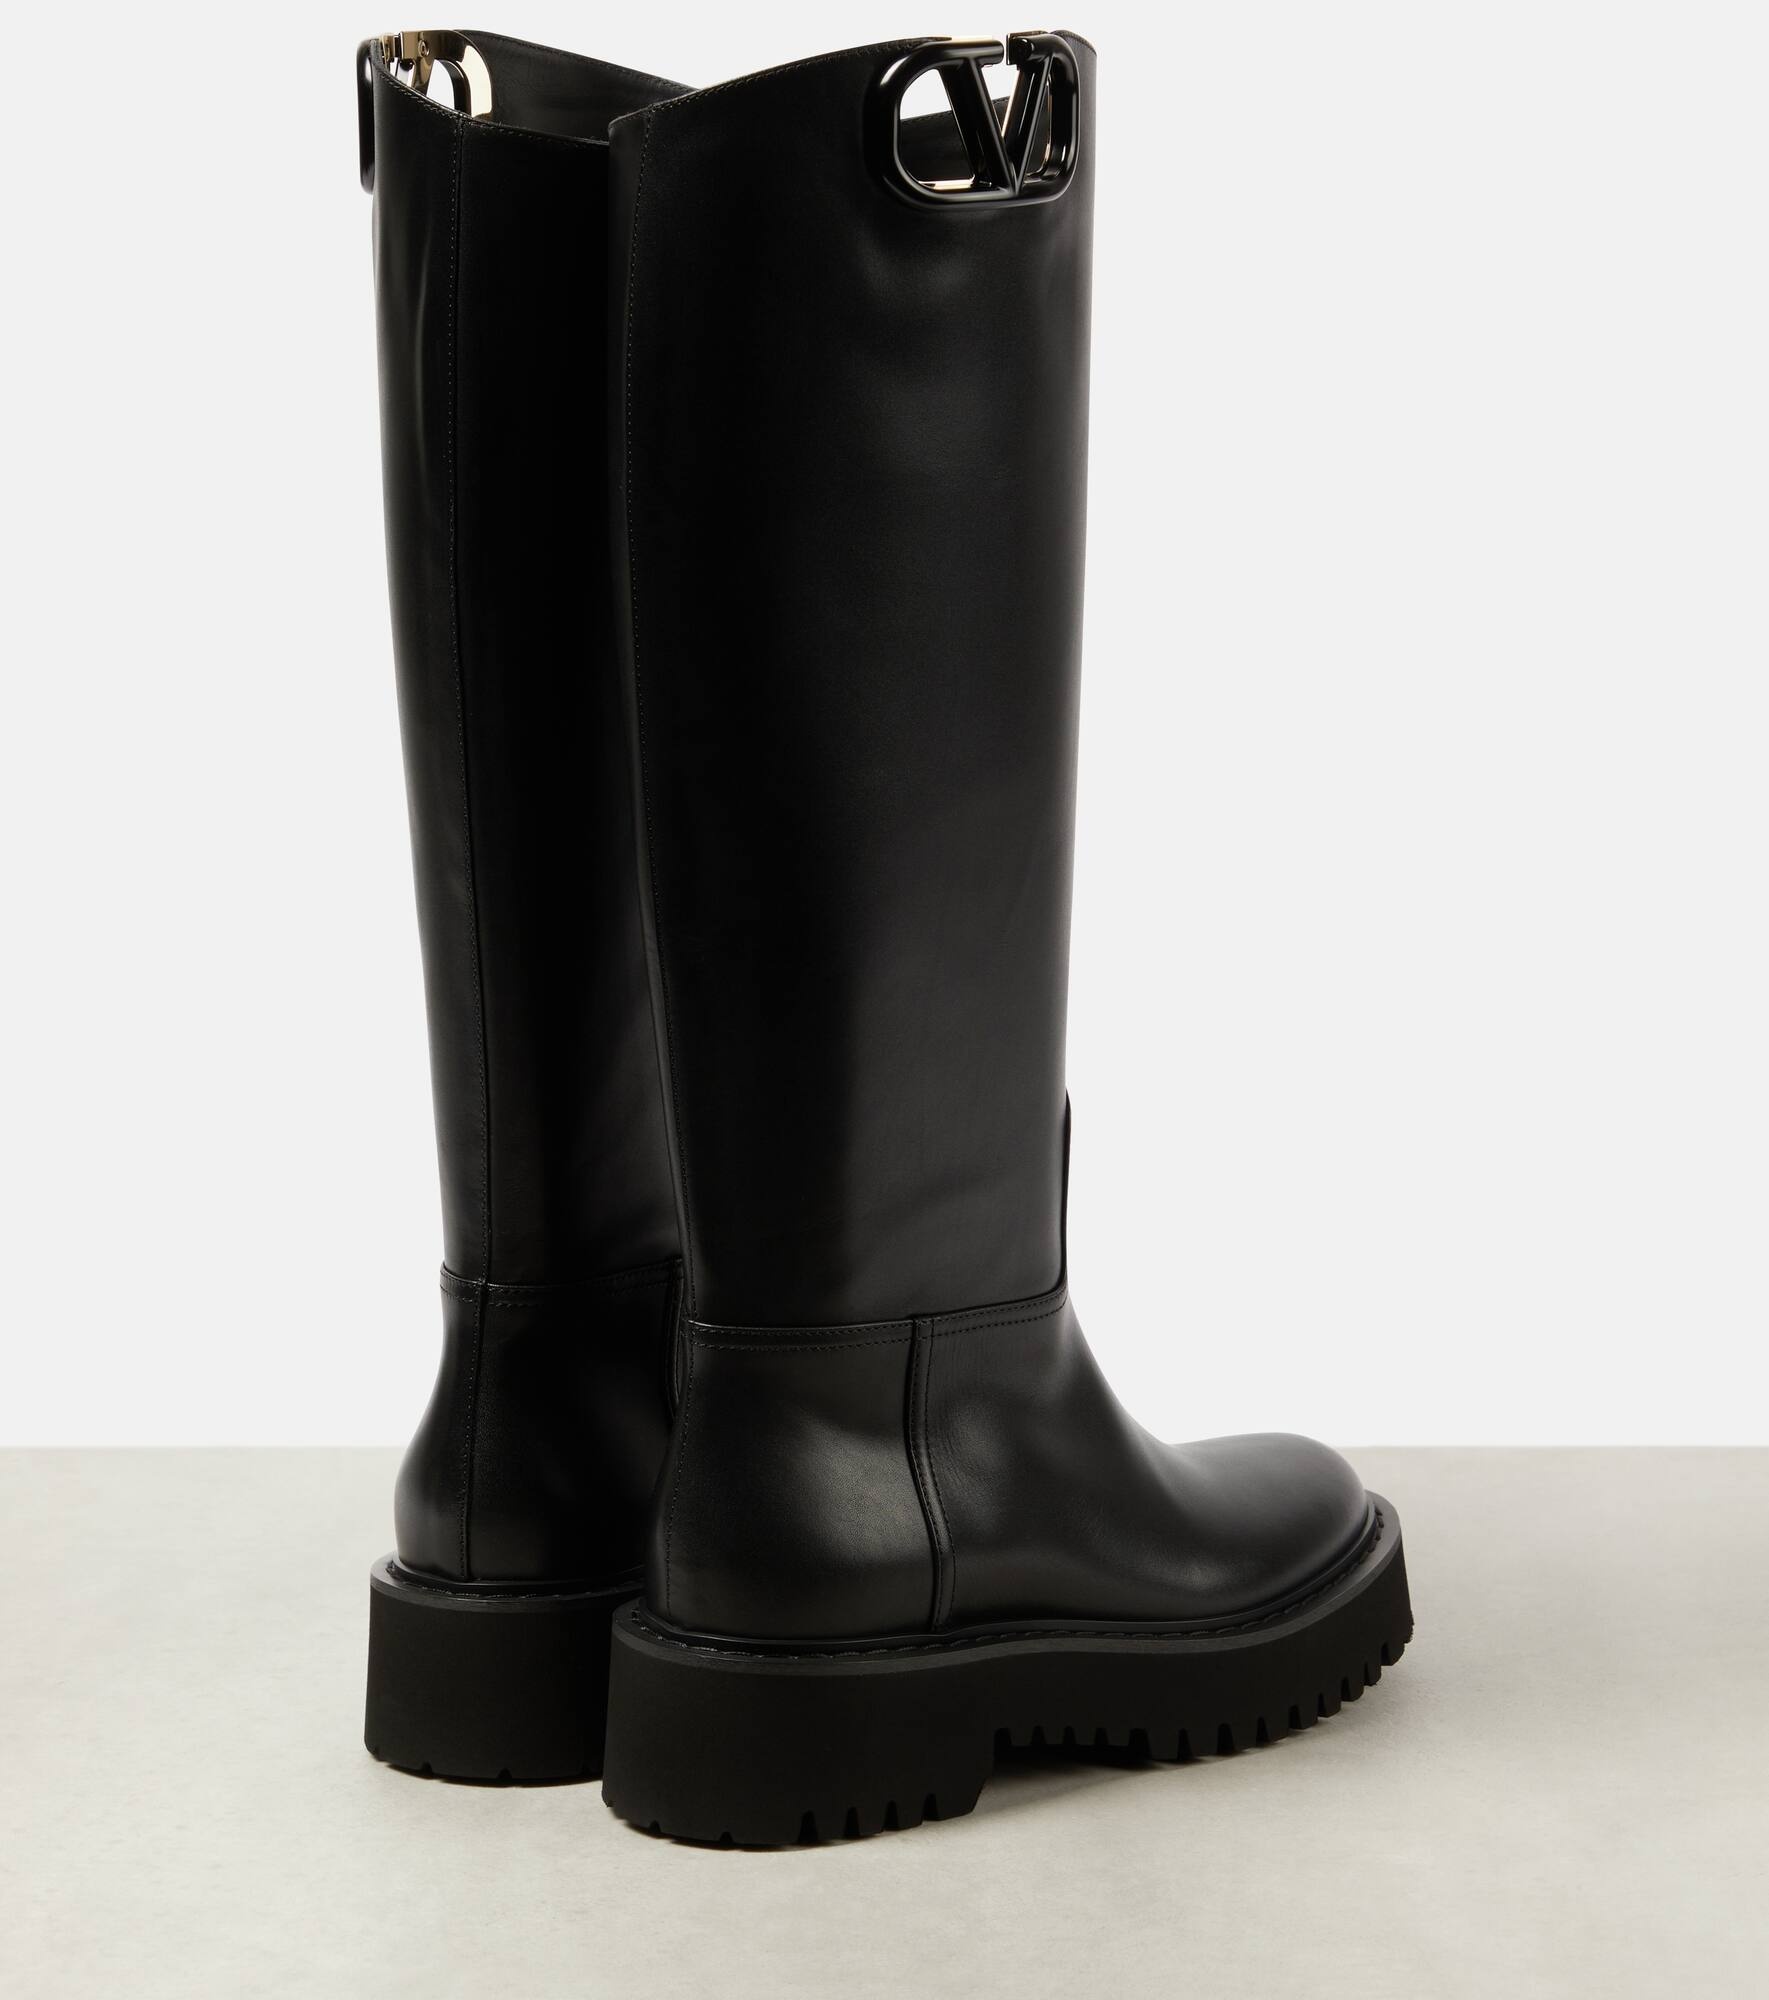 VLogo Signature leather rain boots - 3